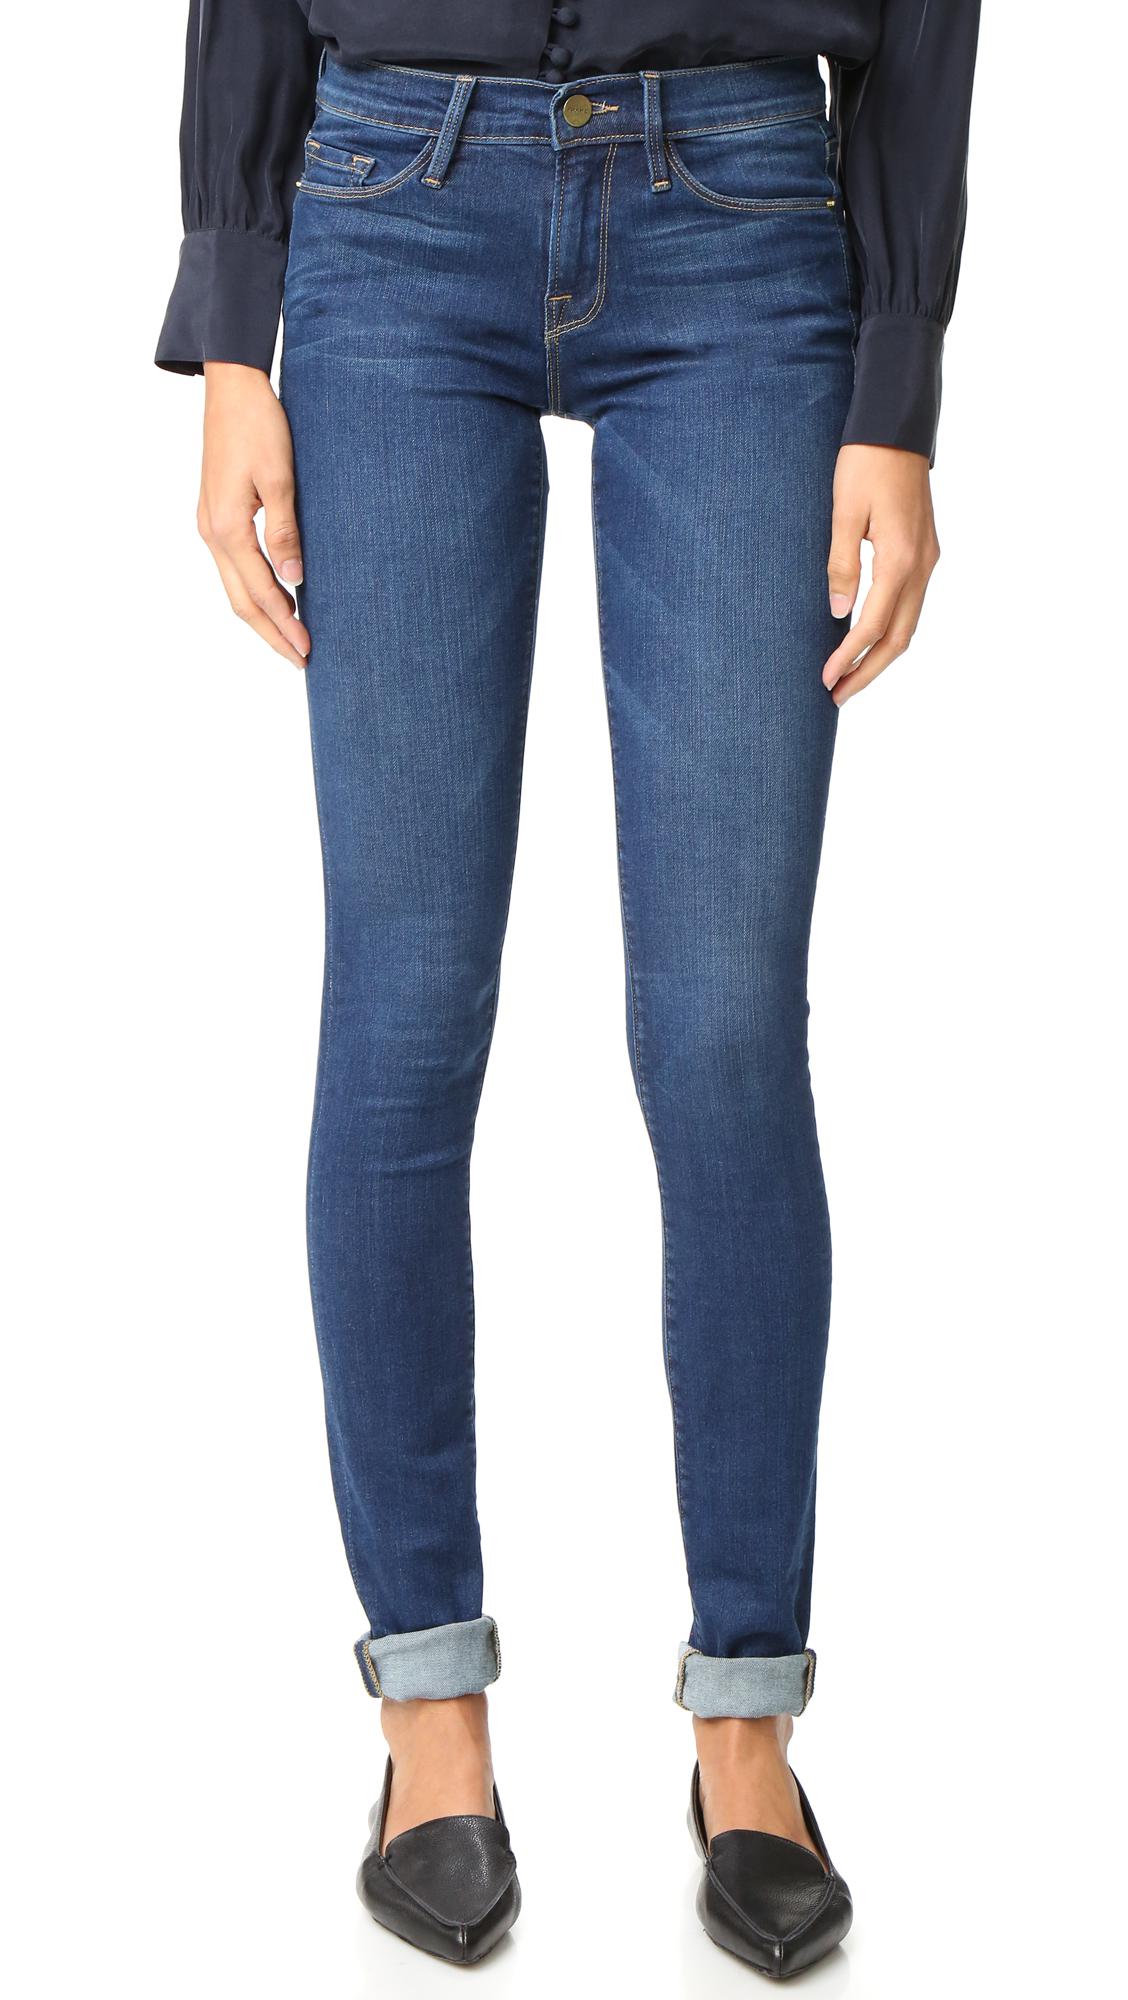 Lyst - FRAME Forever Karlie Tall Skinny Jeans in Blue - Save 30%